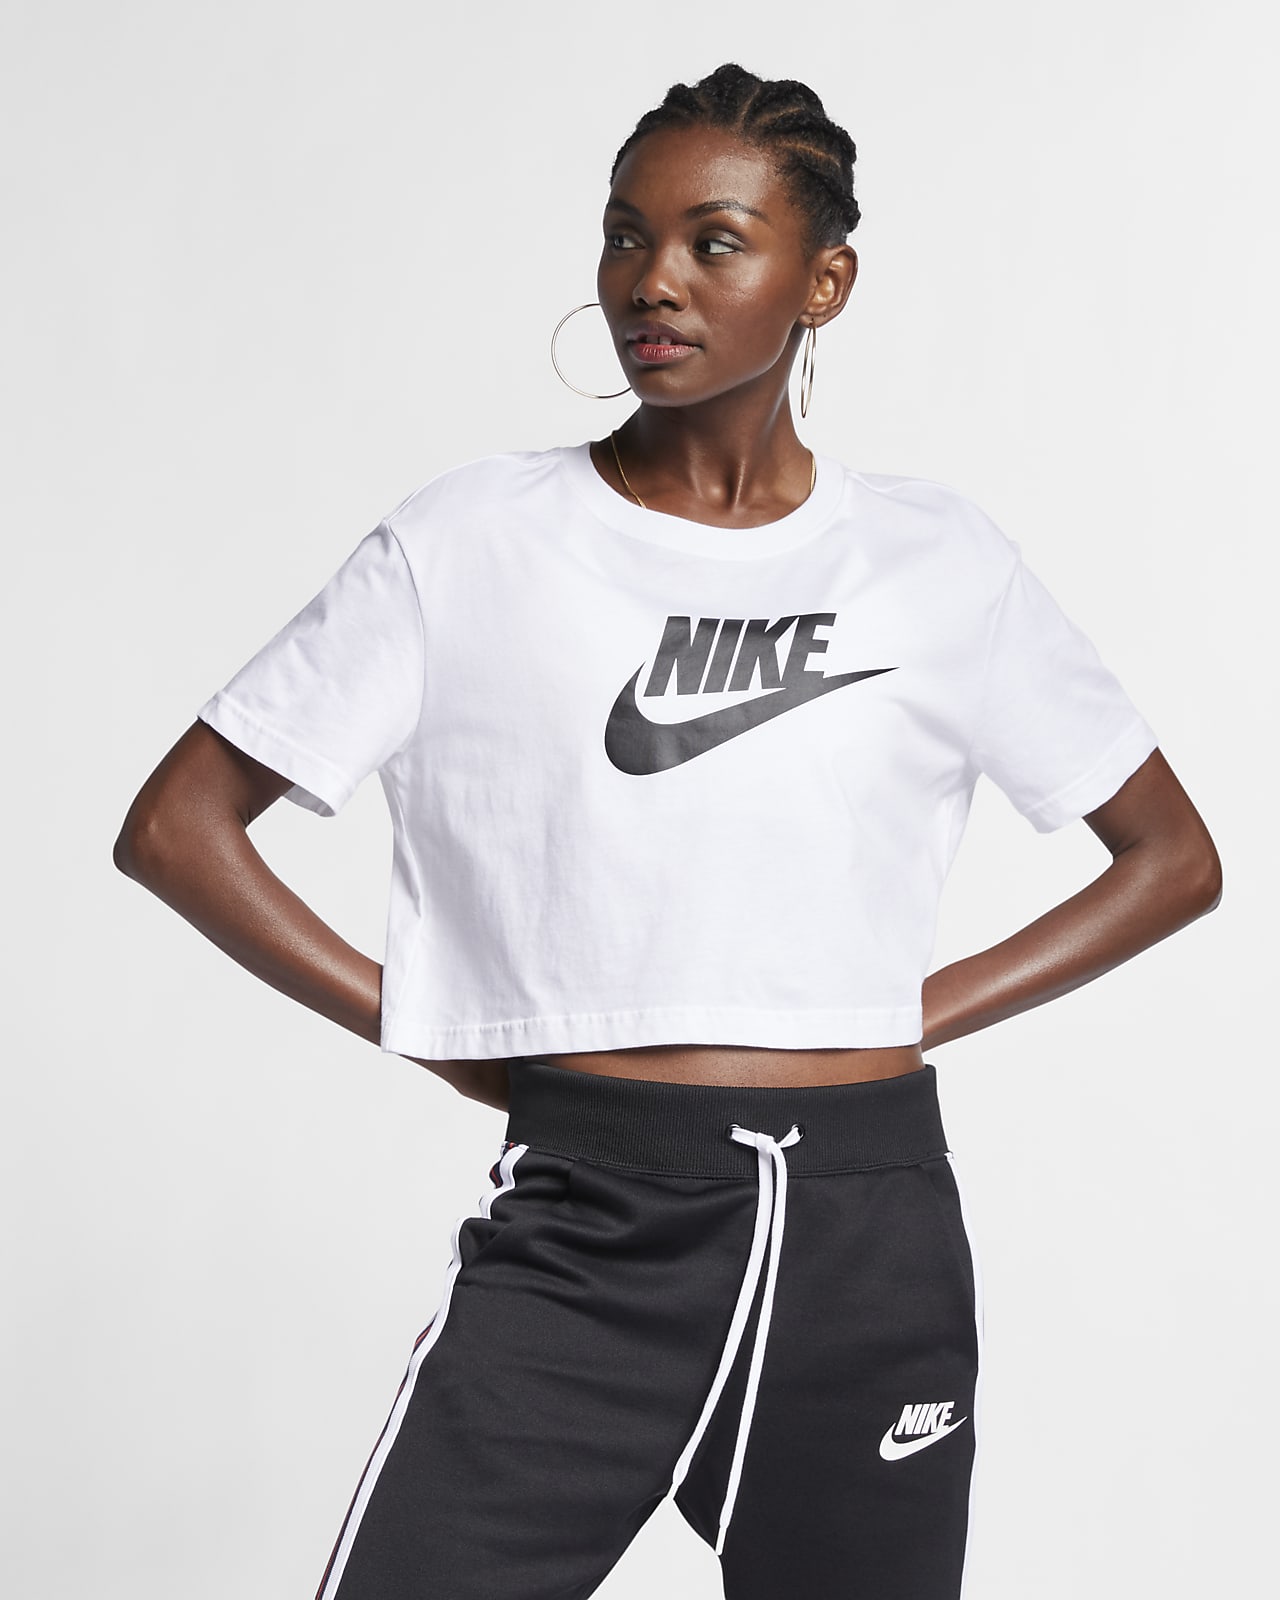 Cropped Tops & T-Shirts. Nike AU